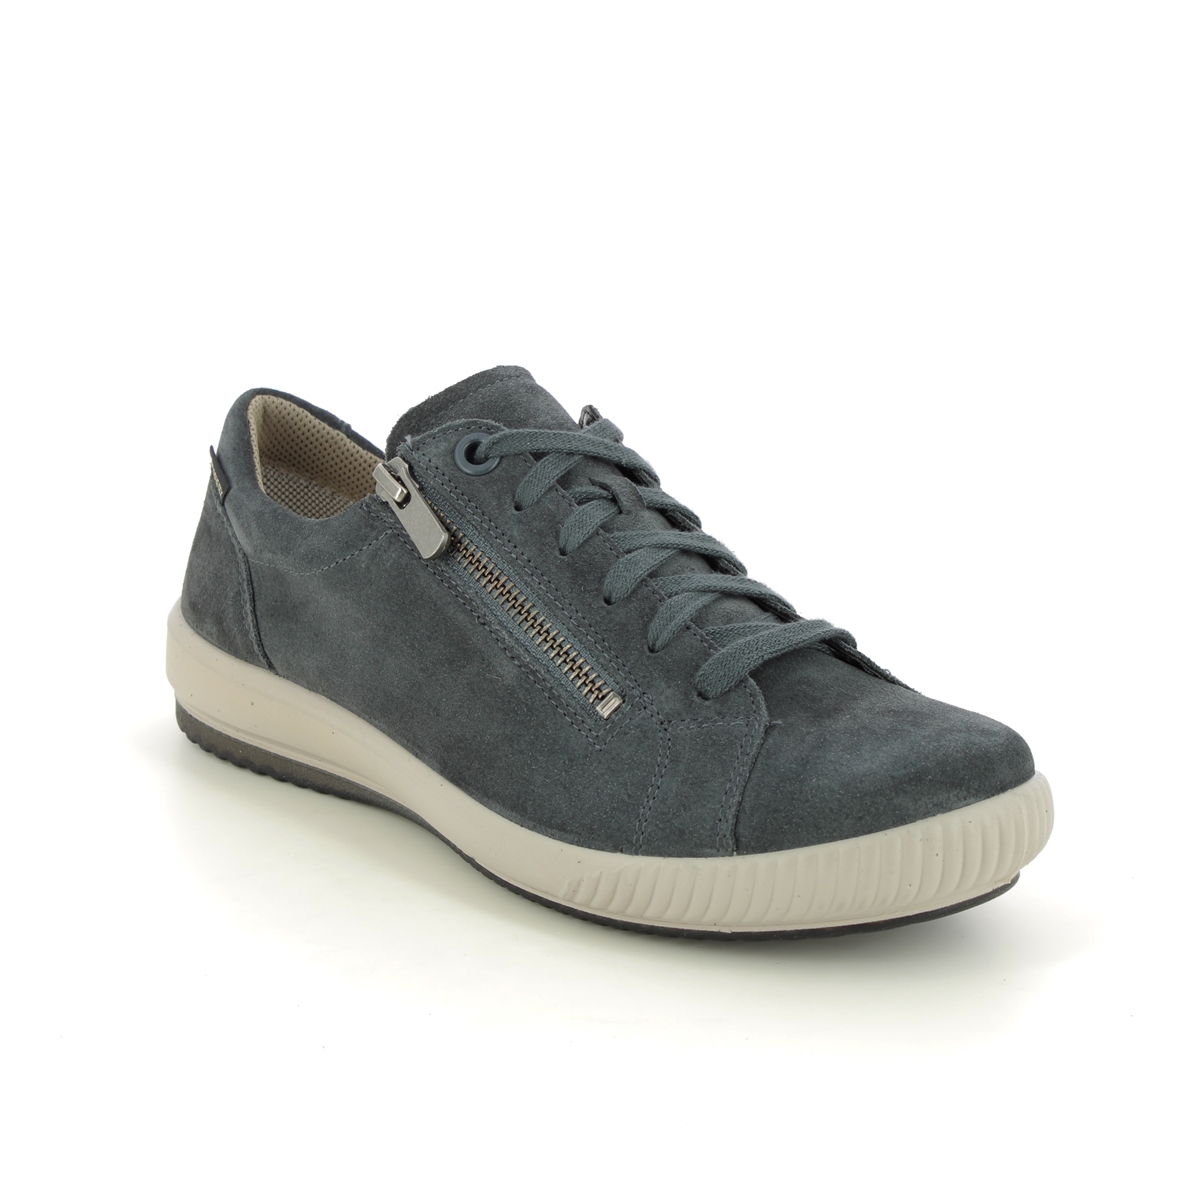 Legero Tanaro Gtx Zip Grey Womens Lacing Shoes 2000219-2930 In Size 5.5 In Plain Grey